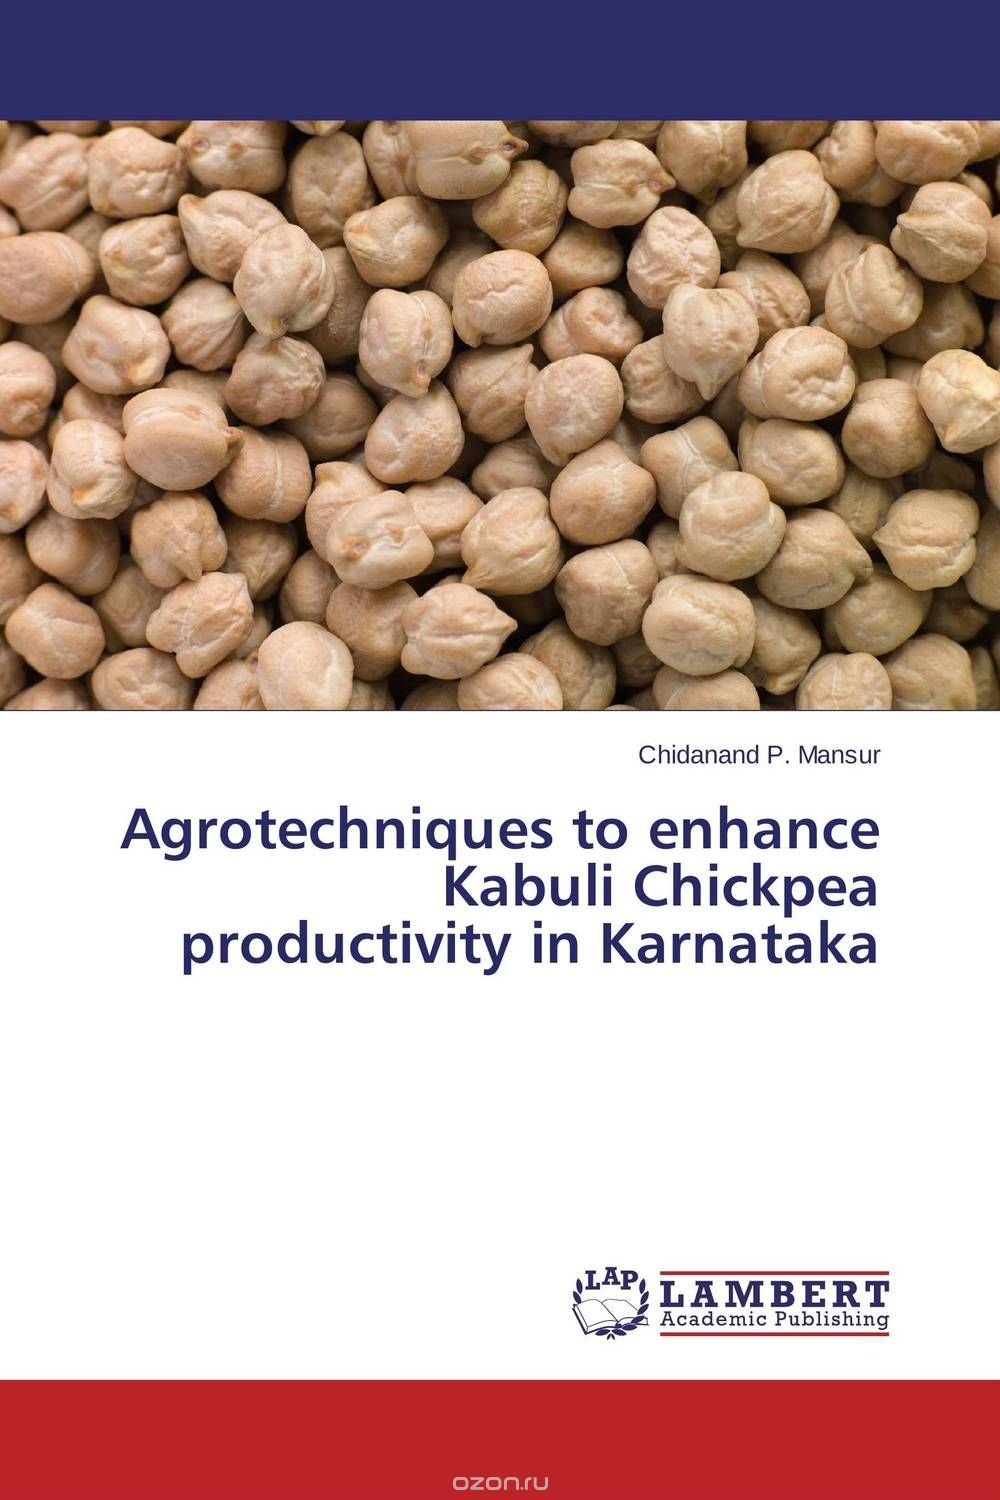 Скачать книгу "Agrotechniques to enhance Kabuli Chickpea productivity in Karnataka"